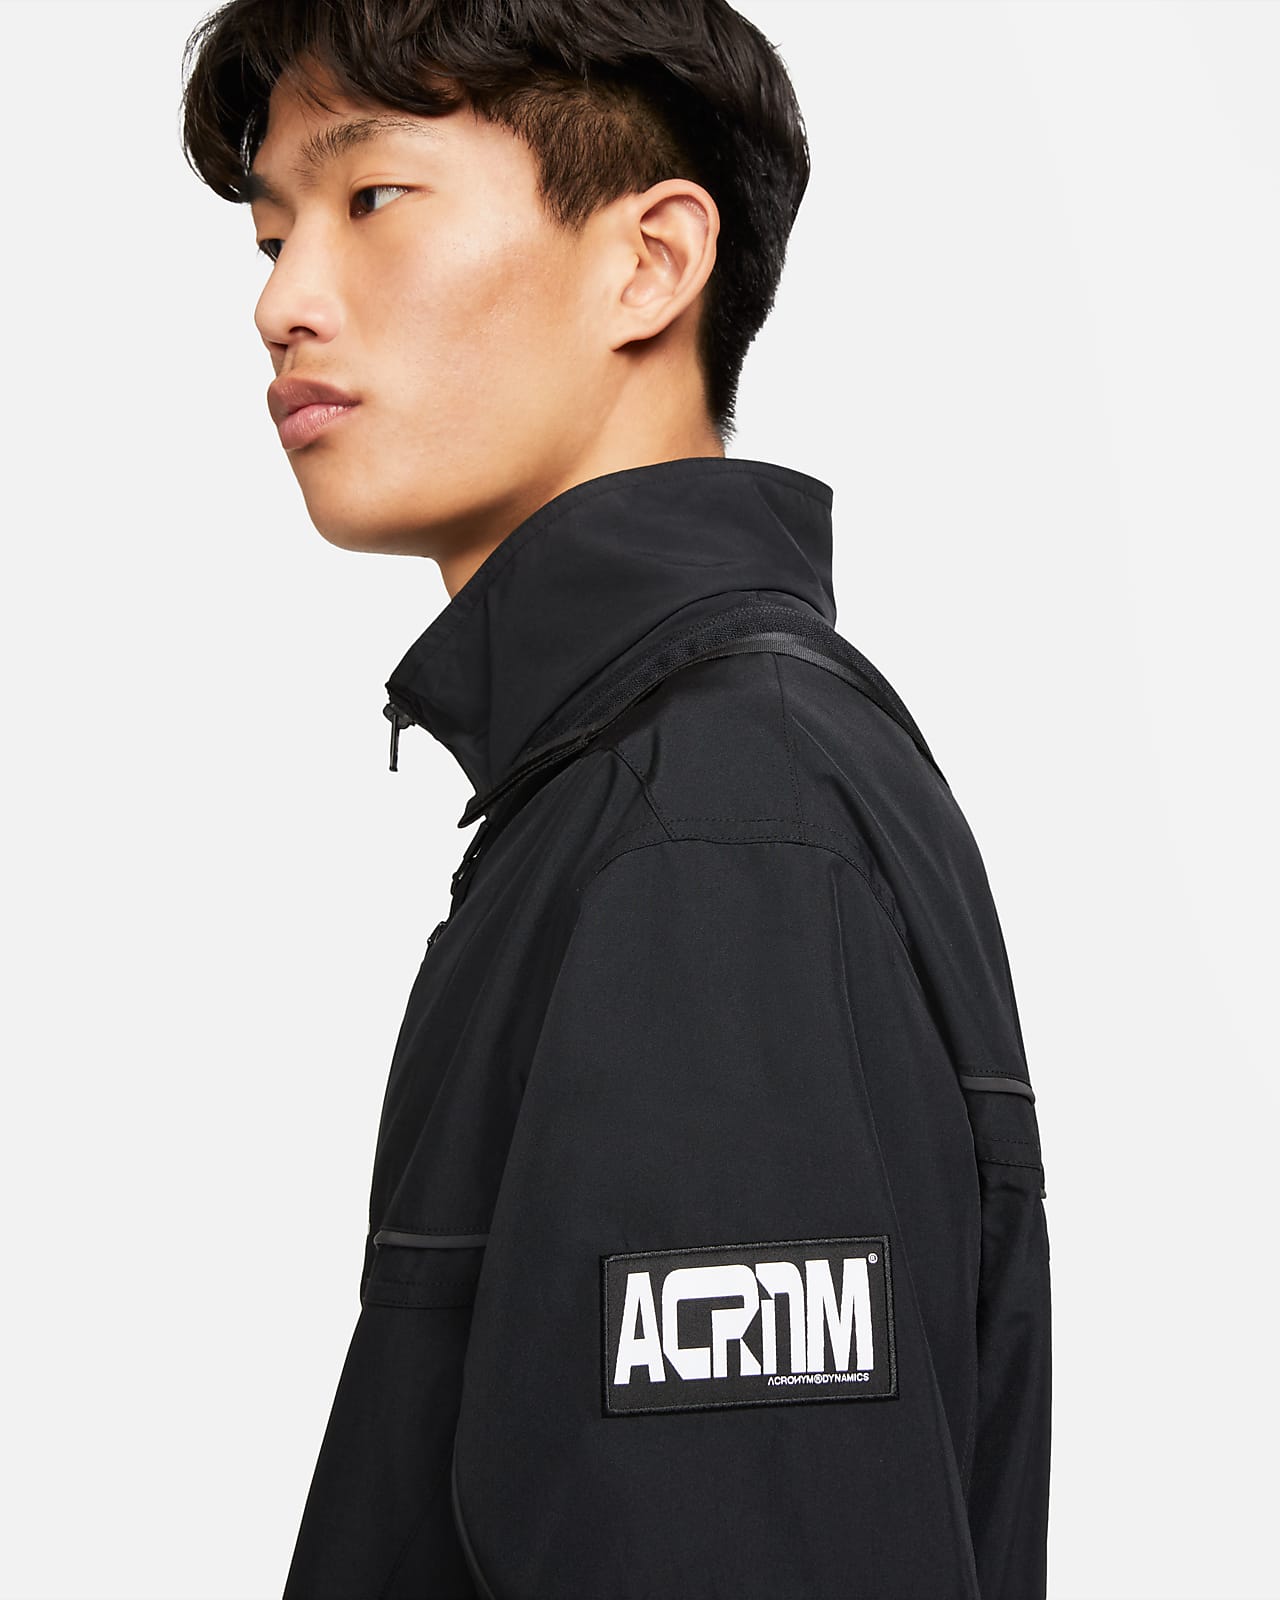 Nike x ACRONYM® Men's Woven Jacket. Nike.com